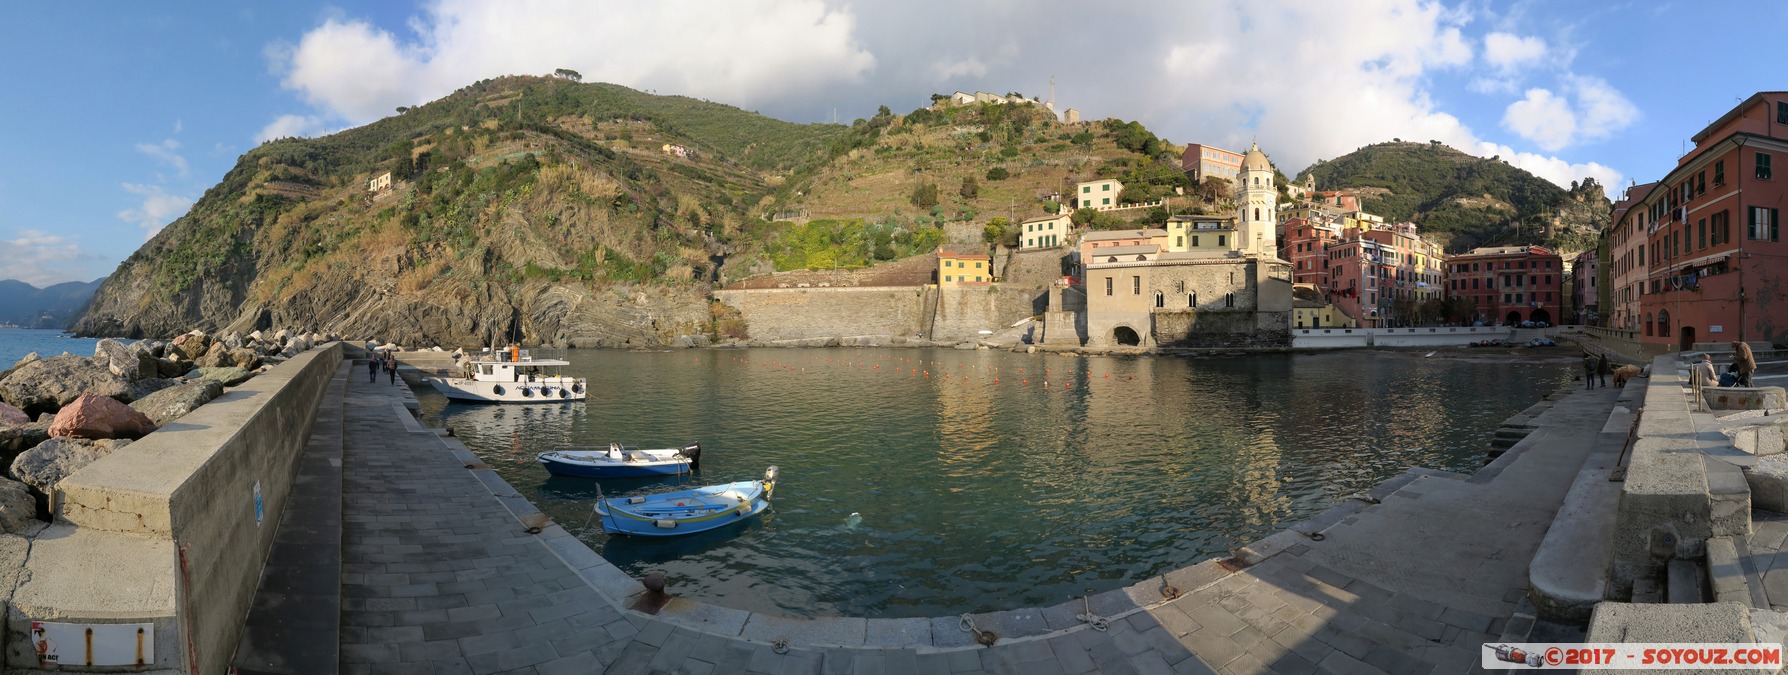 Cinque Terre - Vernazza - Panorama
Mots-clés: ITA Italie Liguria Vernazza Parco Nazionale delle Cinque Terre patrimoine unesco Port Lumiere panorama